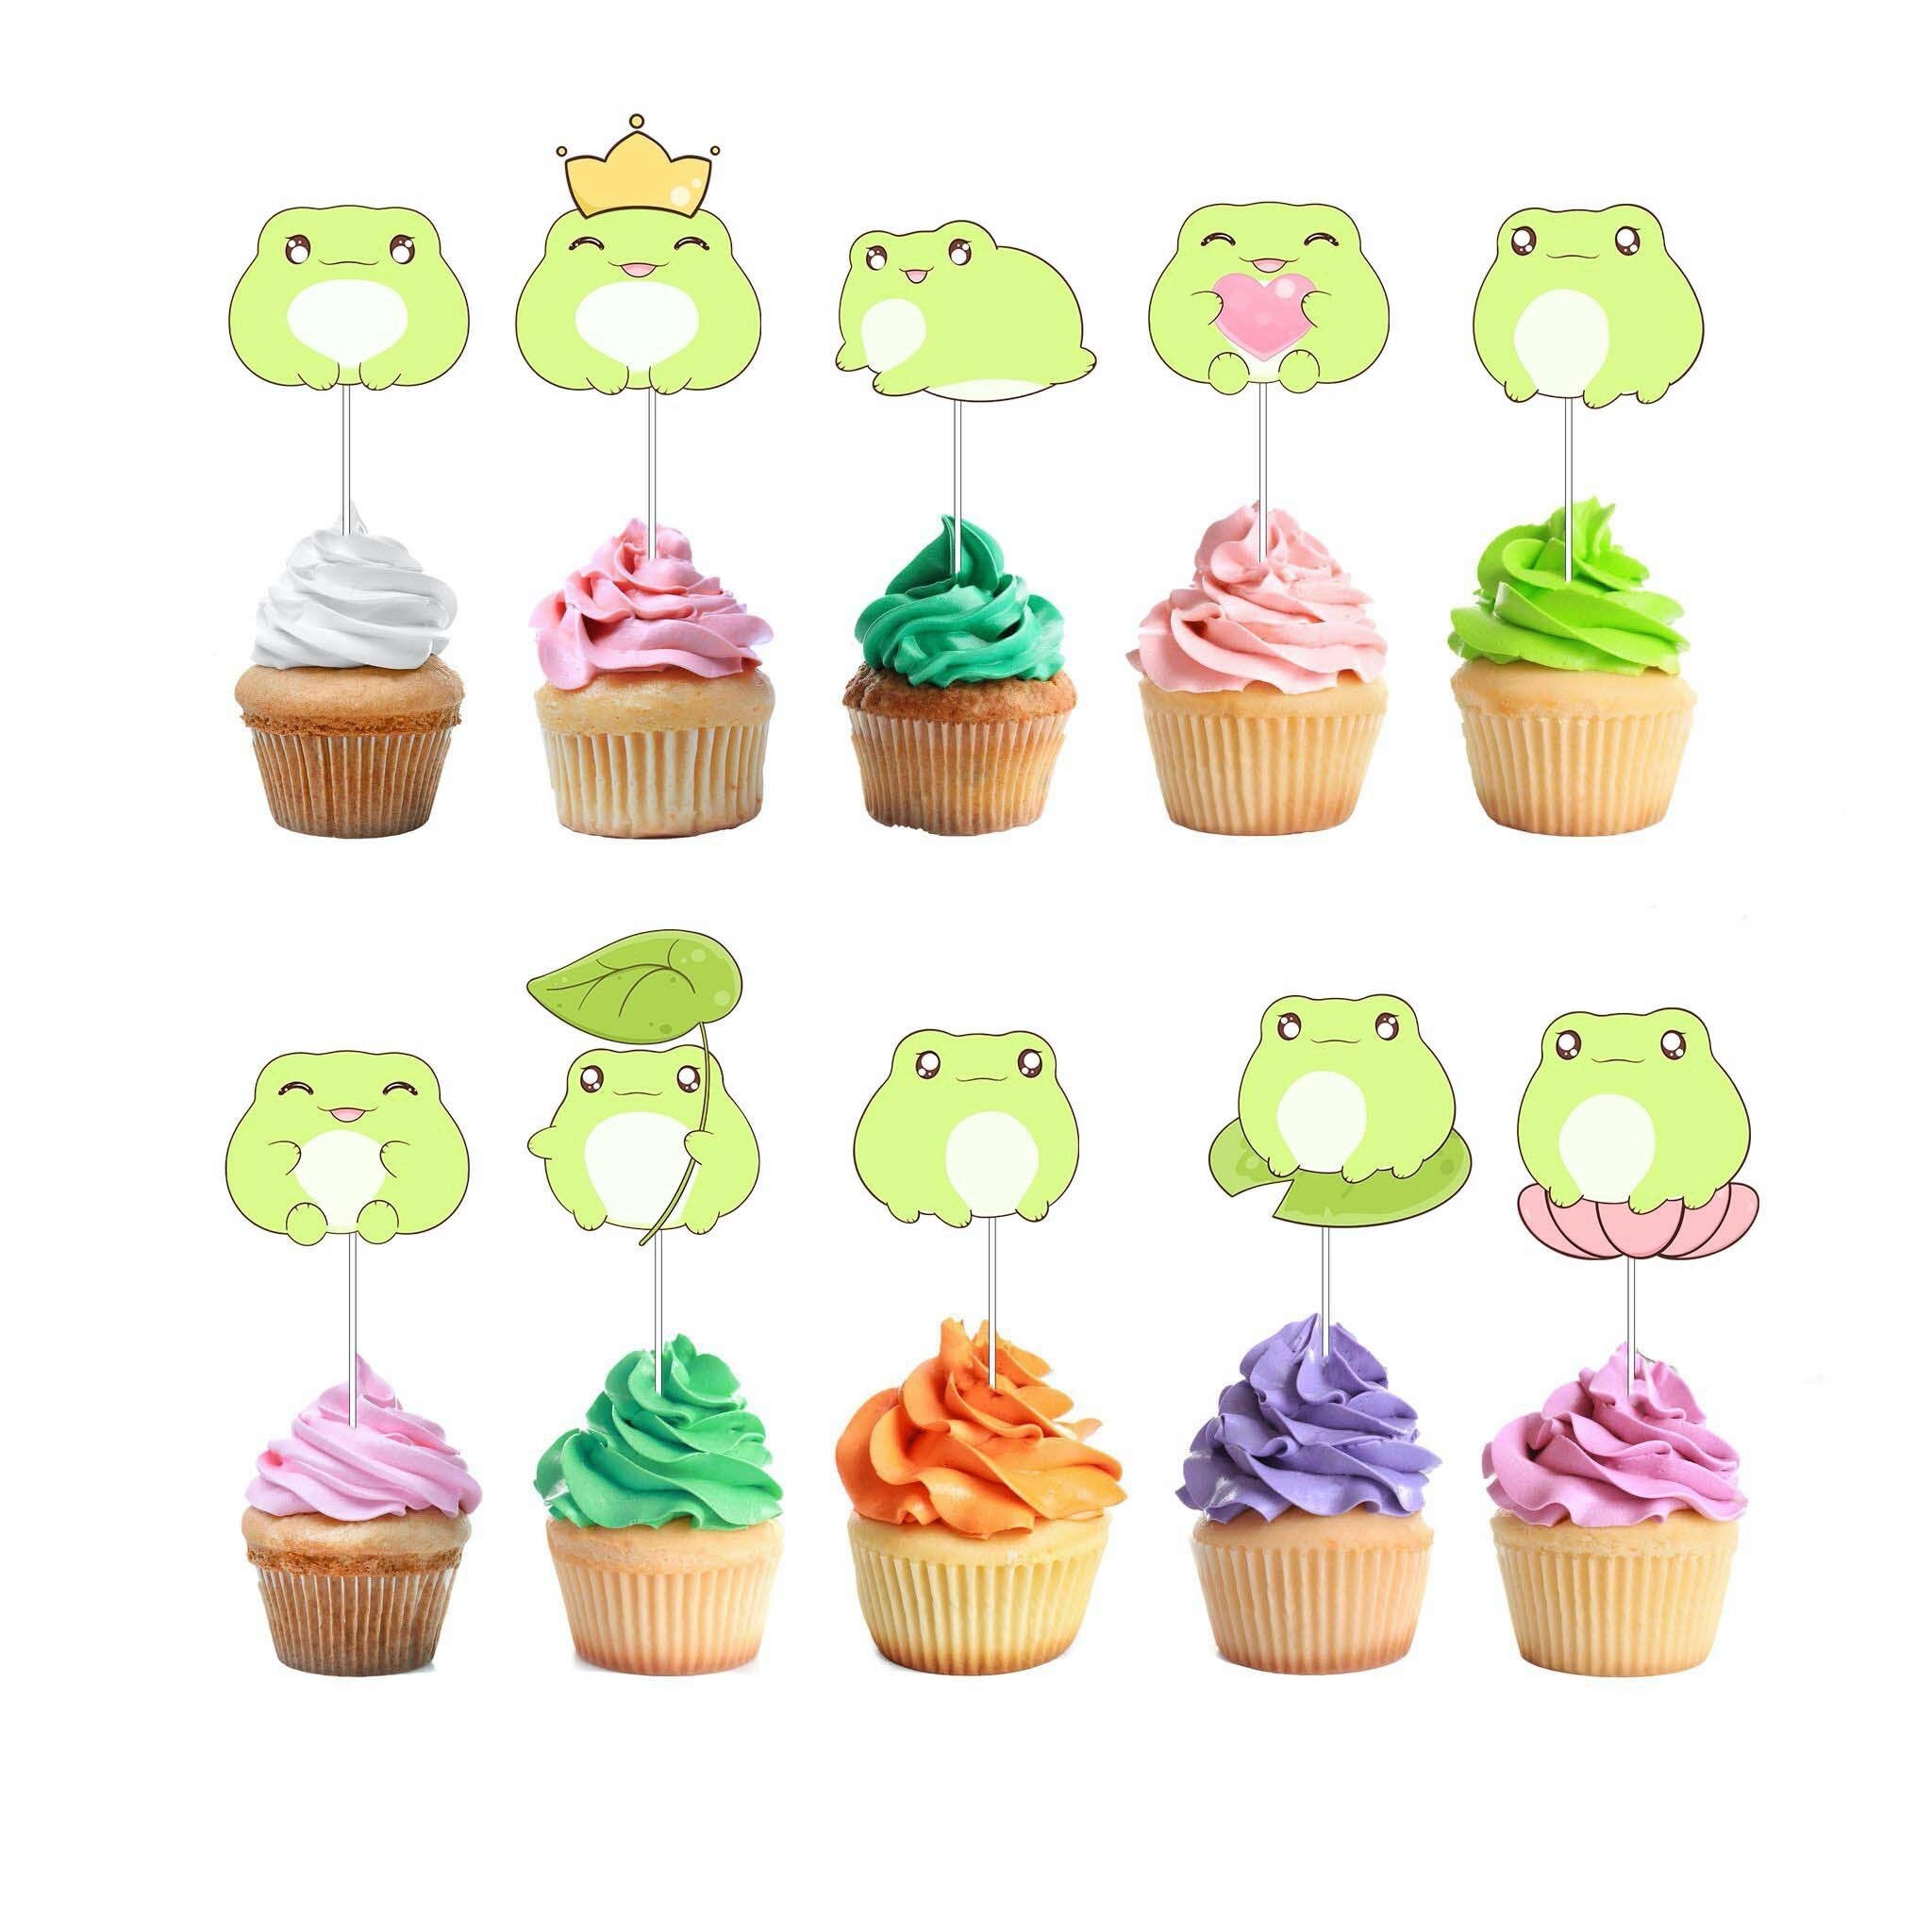 Kawaii Frog Cupcake Toppers - Hop into Adorable Dessert Decorations!